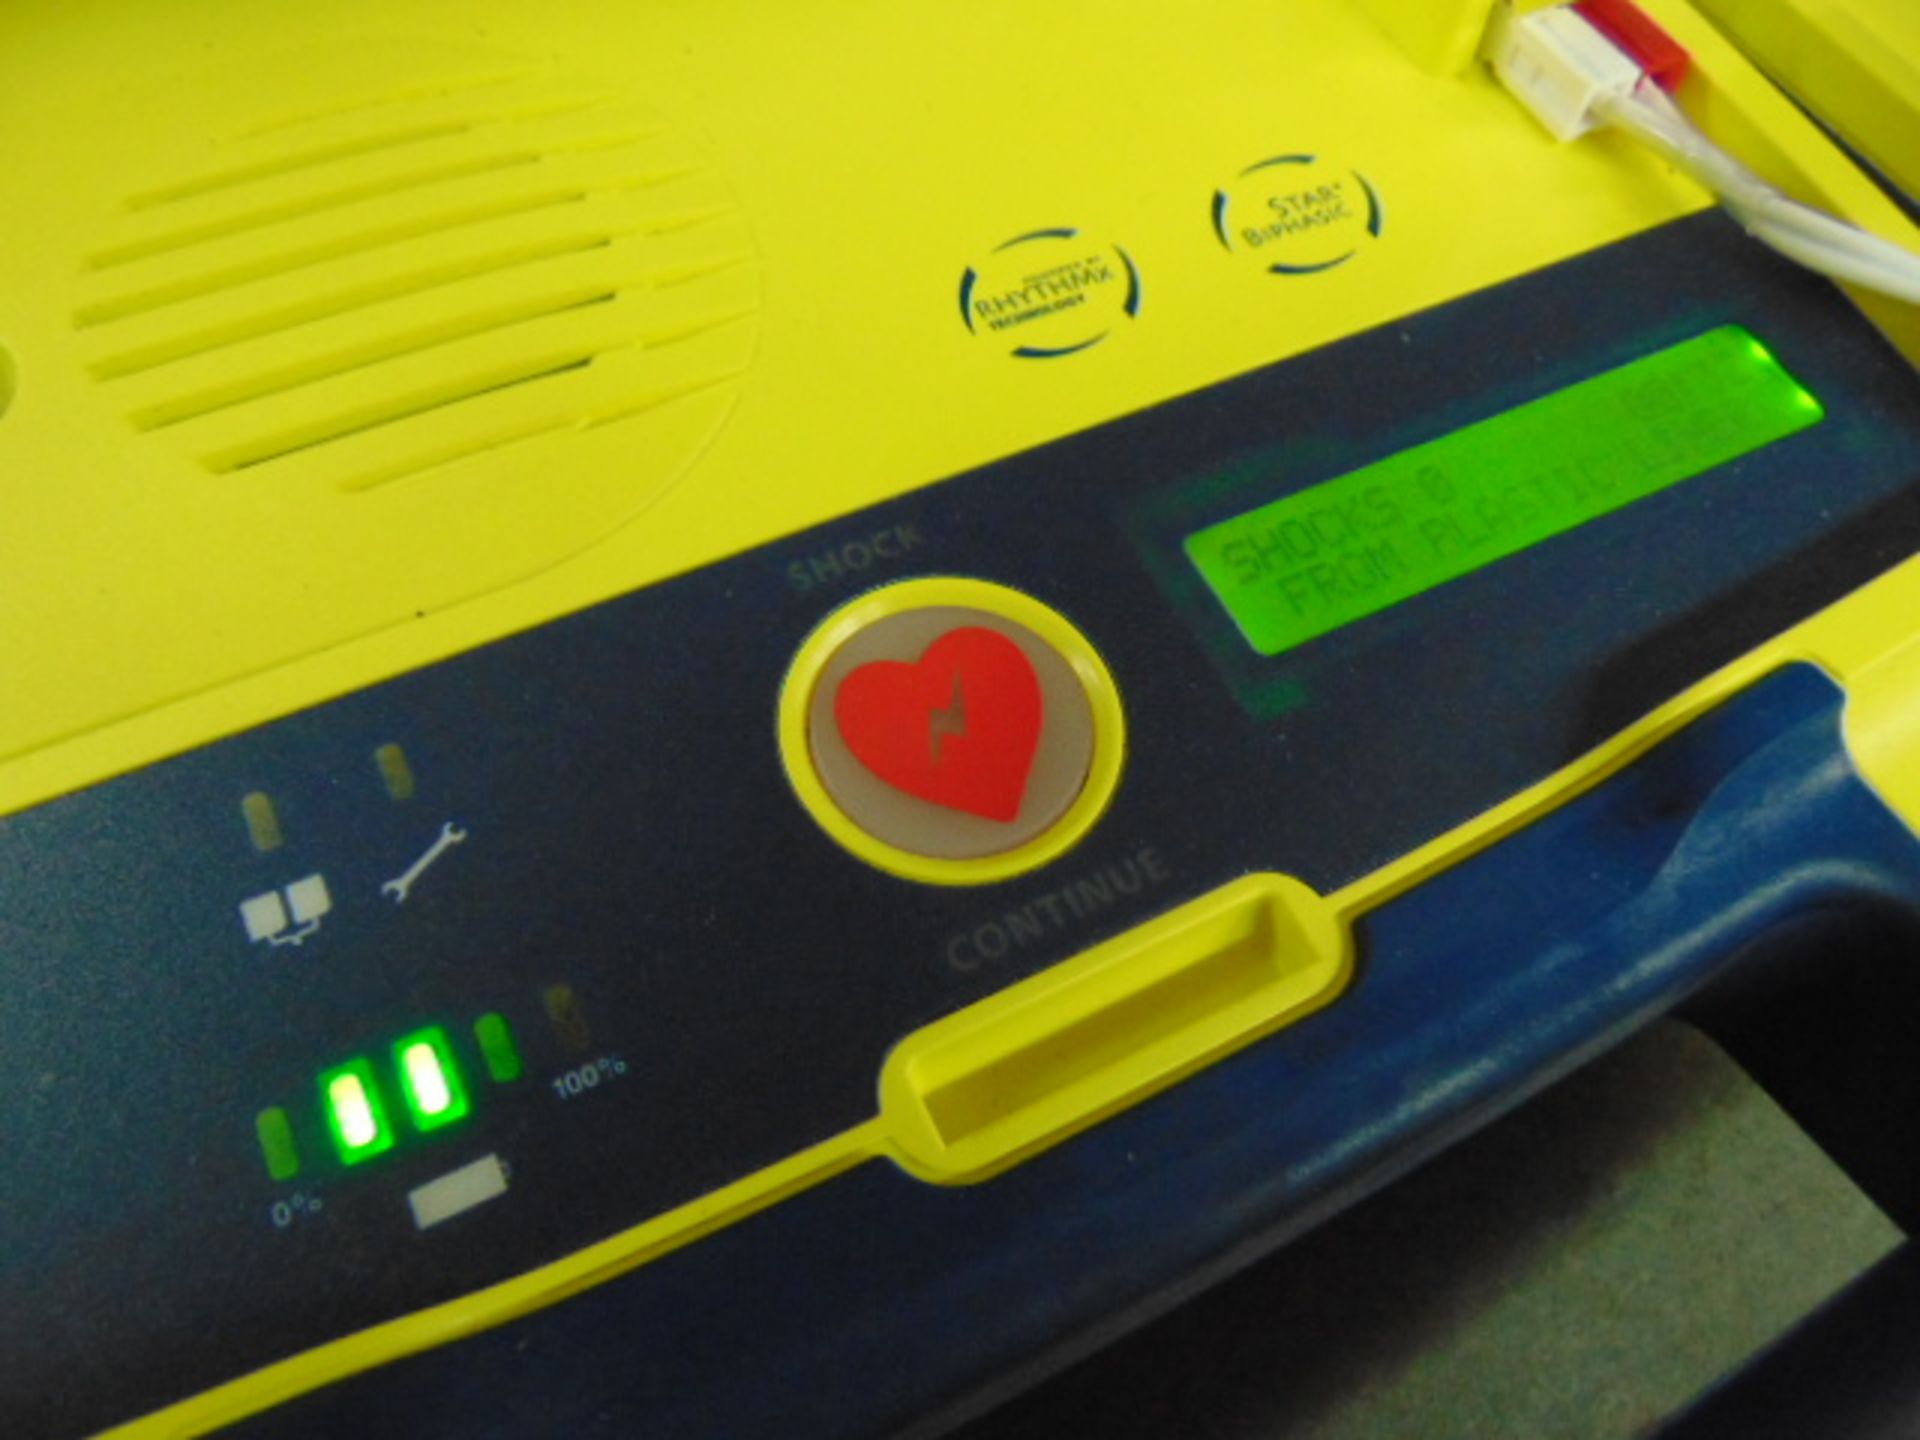 2 x Cardiac Science Powerheart G3 Automatic AED Automatic External Defribrillators - Bild 5 aus 12